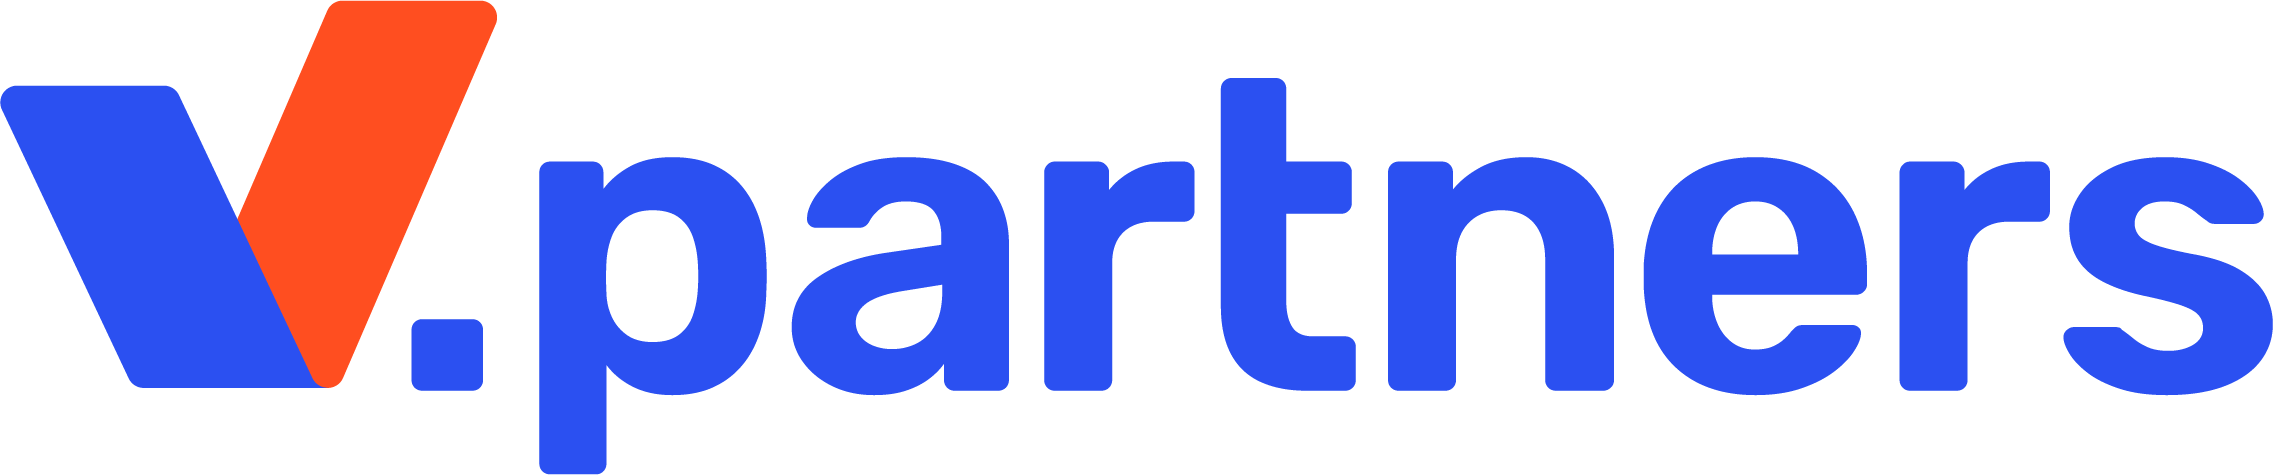 V.Partners logo